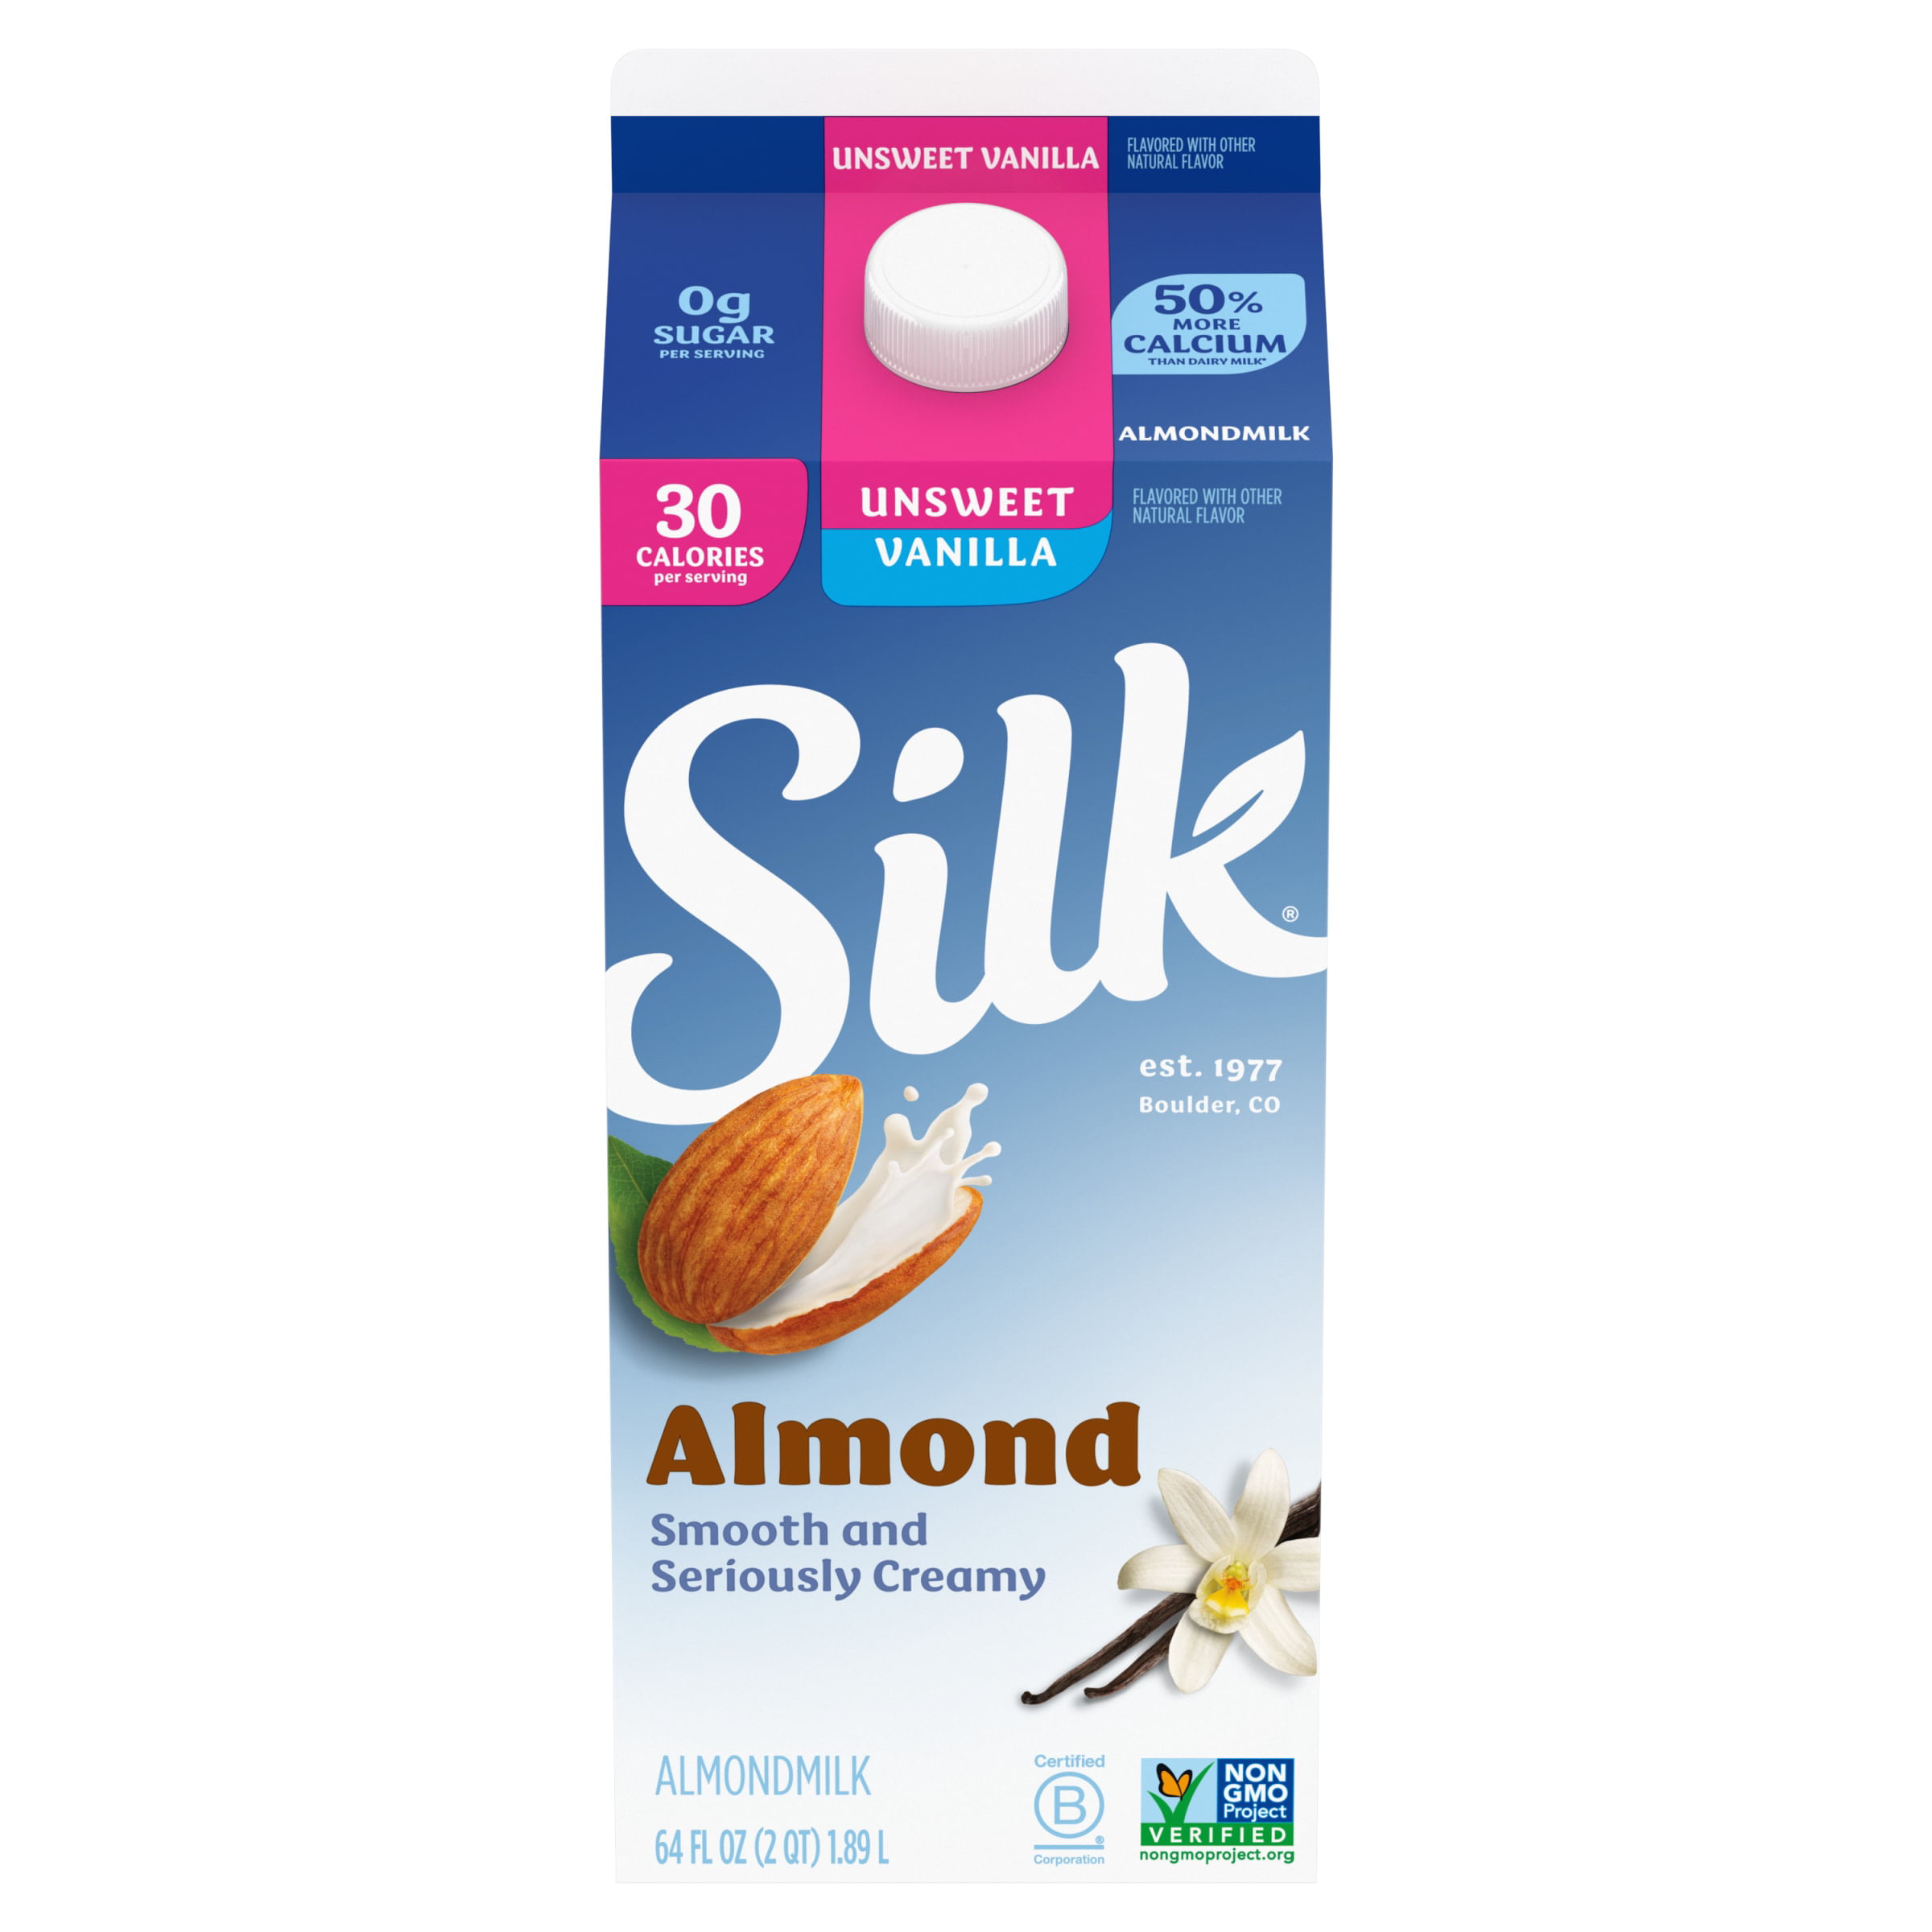 Found my new coffee creamer: Silk Half & Half! : r/dairyfree